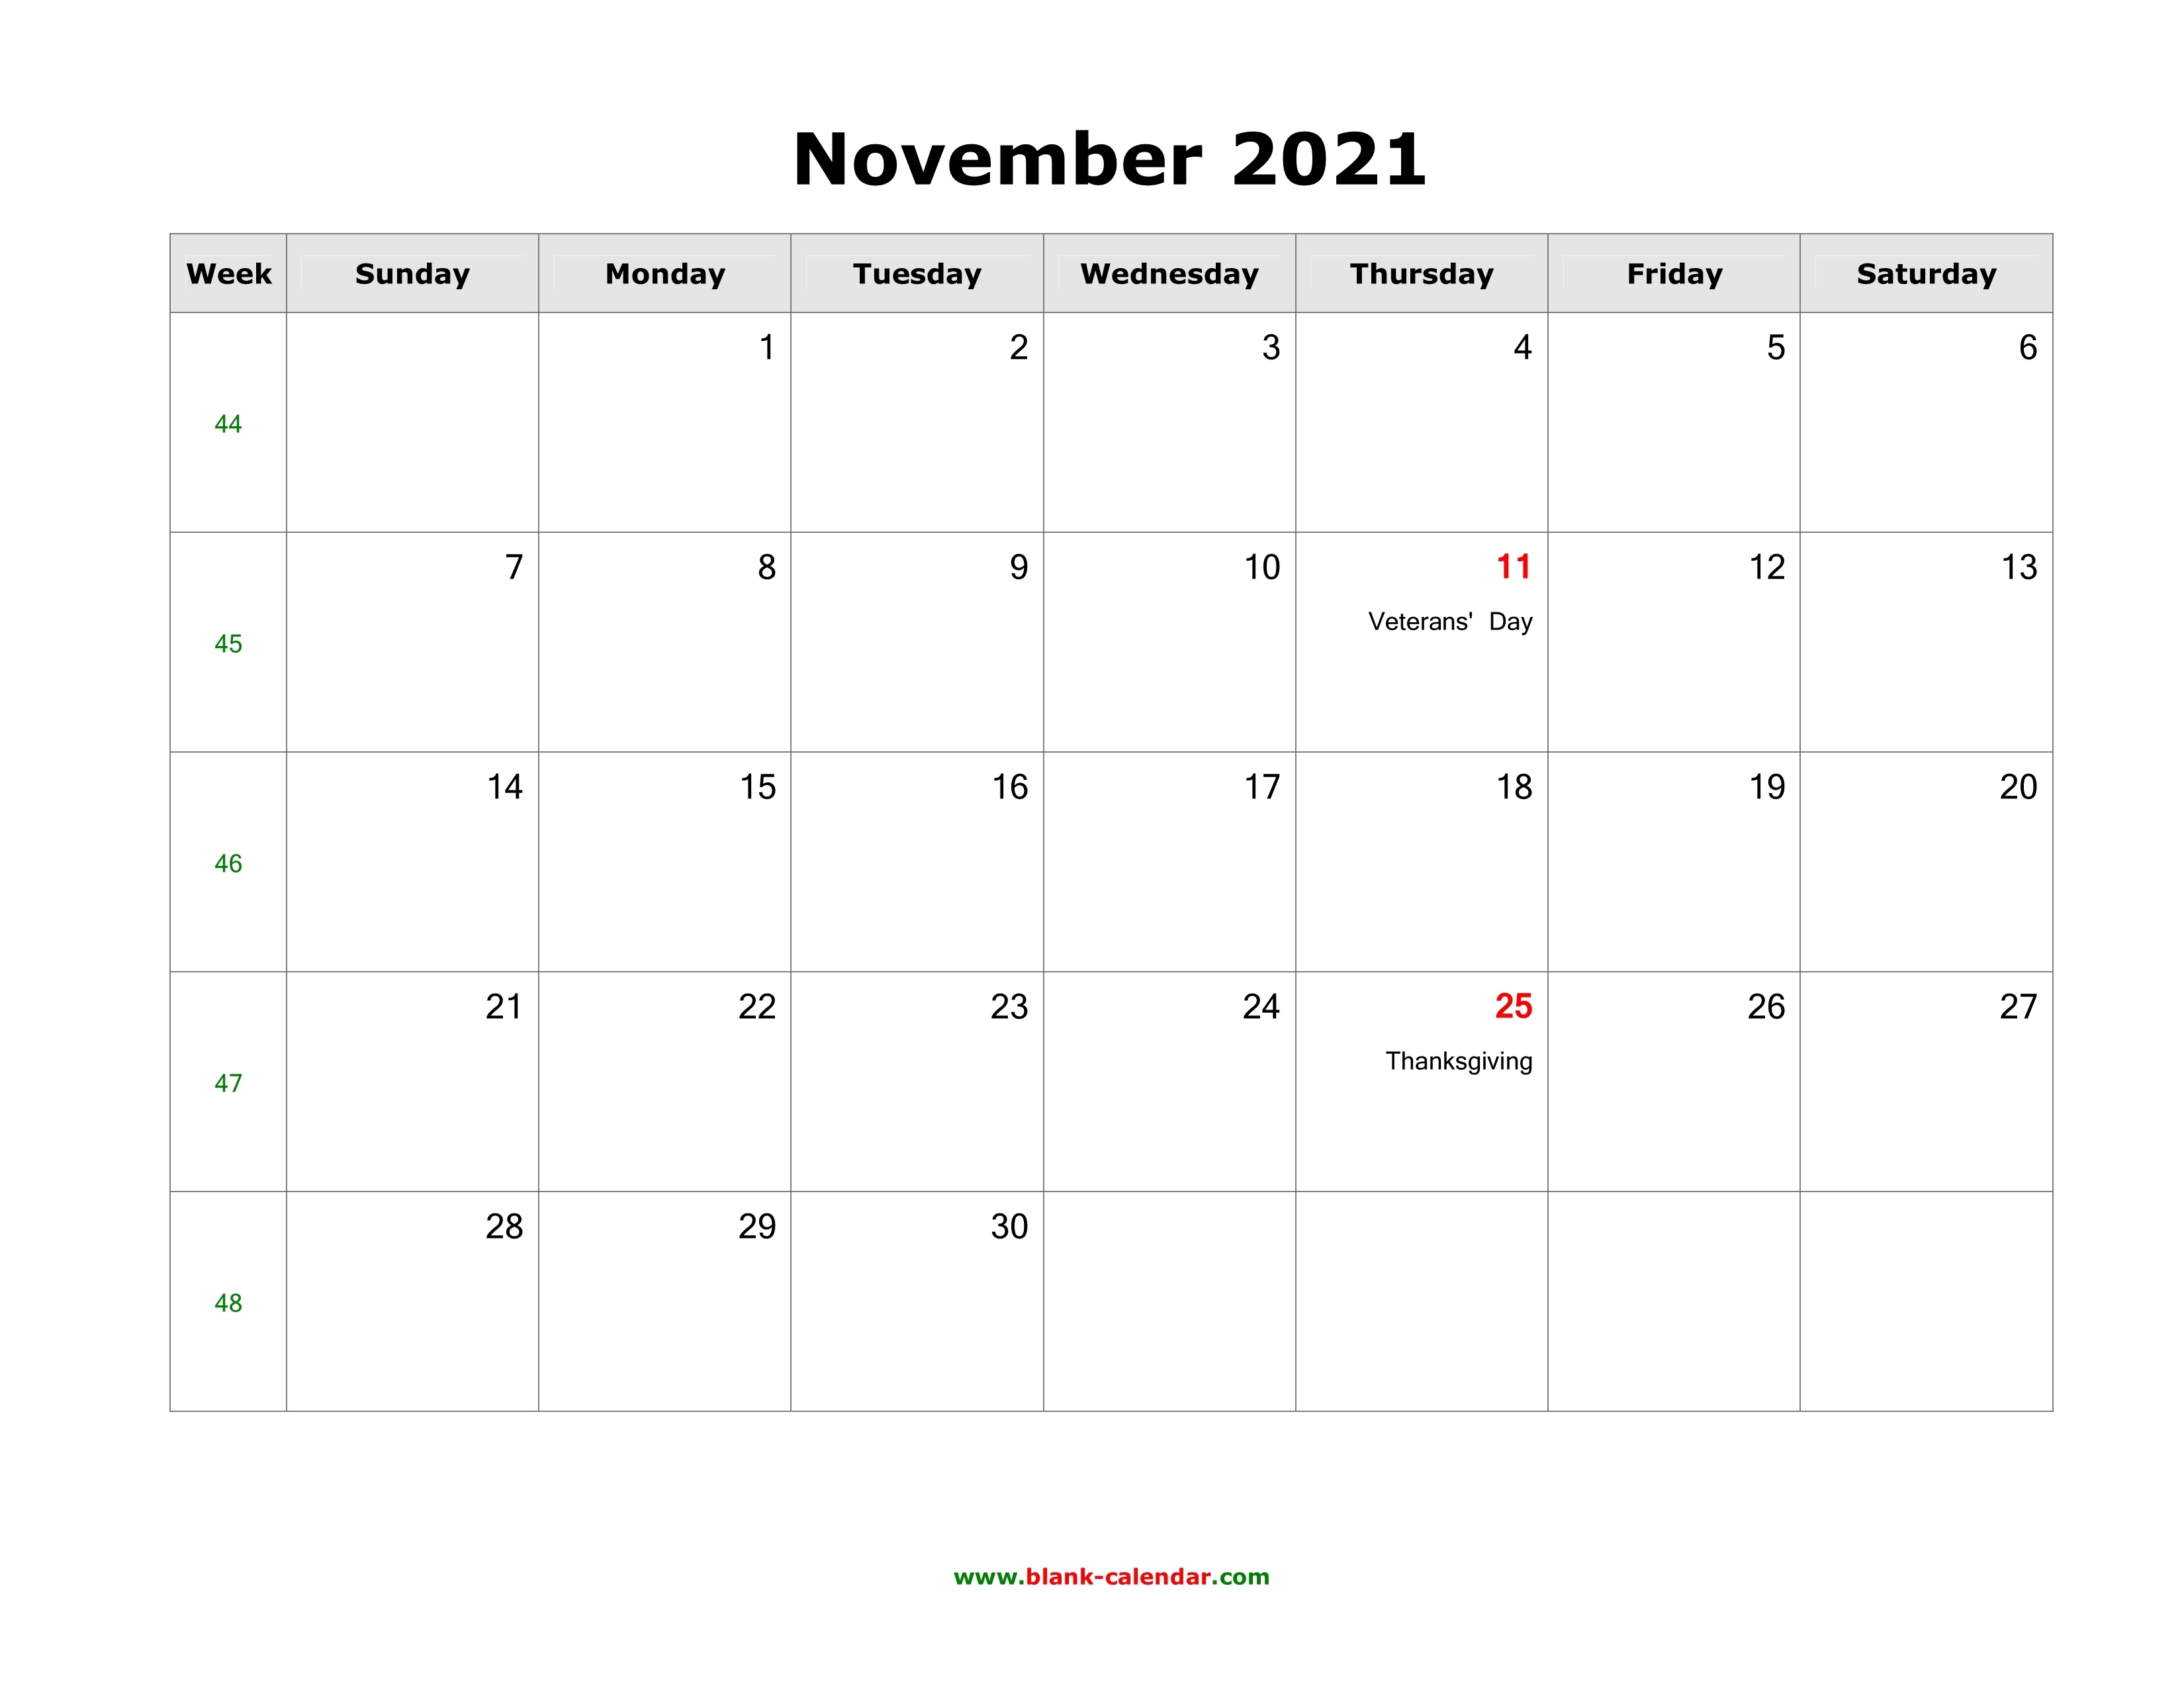 November 2021 Blank Calendar | Free Download Calendar Templates Calendar For November And December 2021